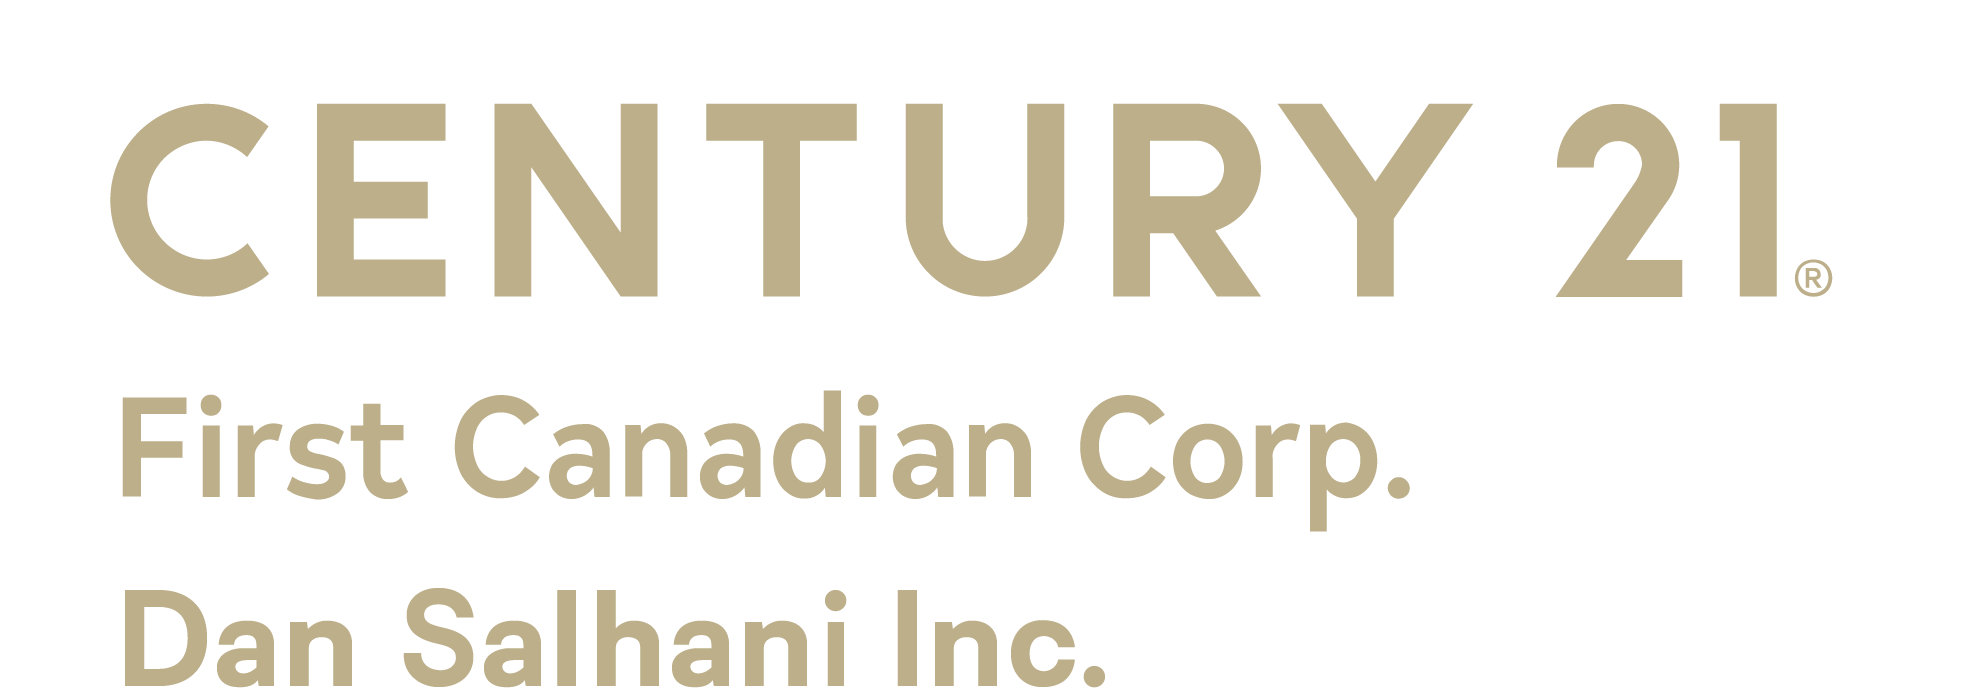 Century 21 First Canadian Corp. Dan Salhani Inc.